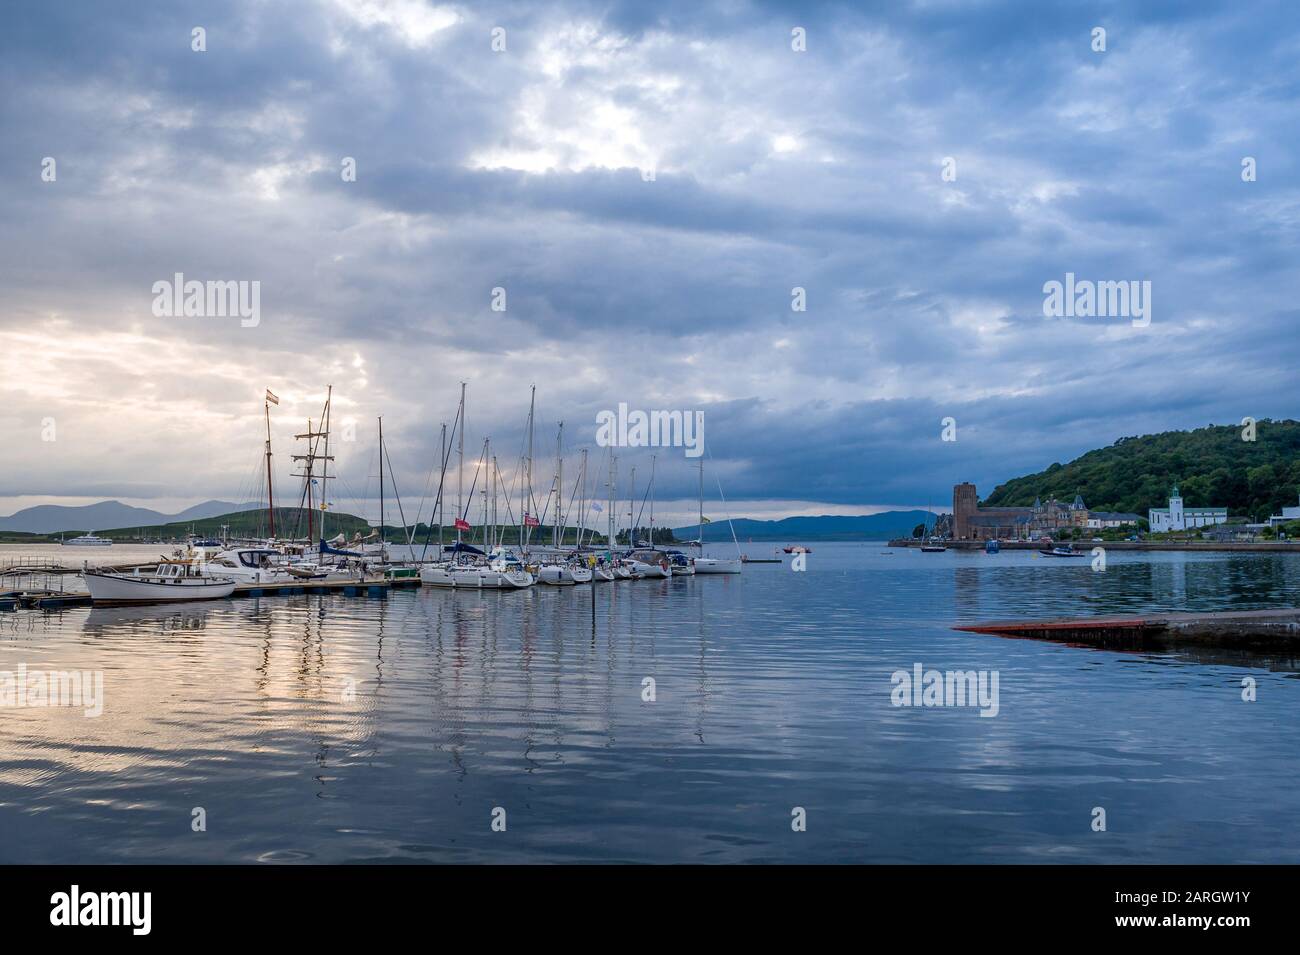 Oban marina after sunset panoramic view of sailing boats docked. Hebrides islands, Scotland. Stock Photo